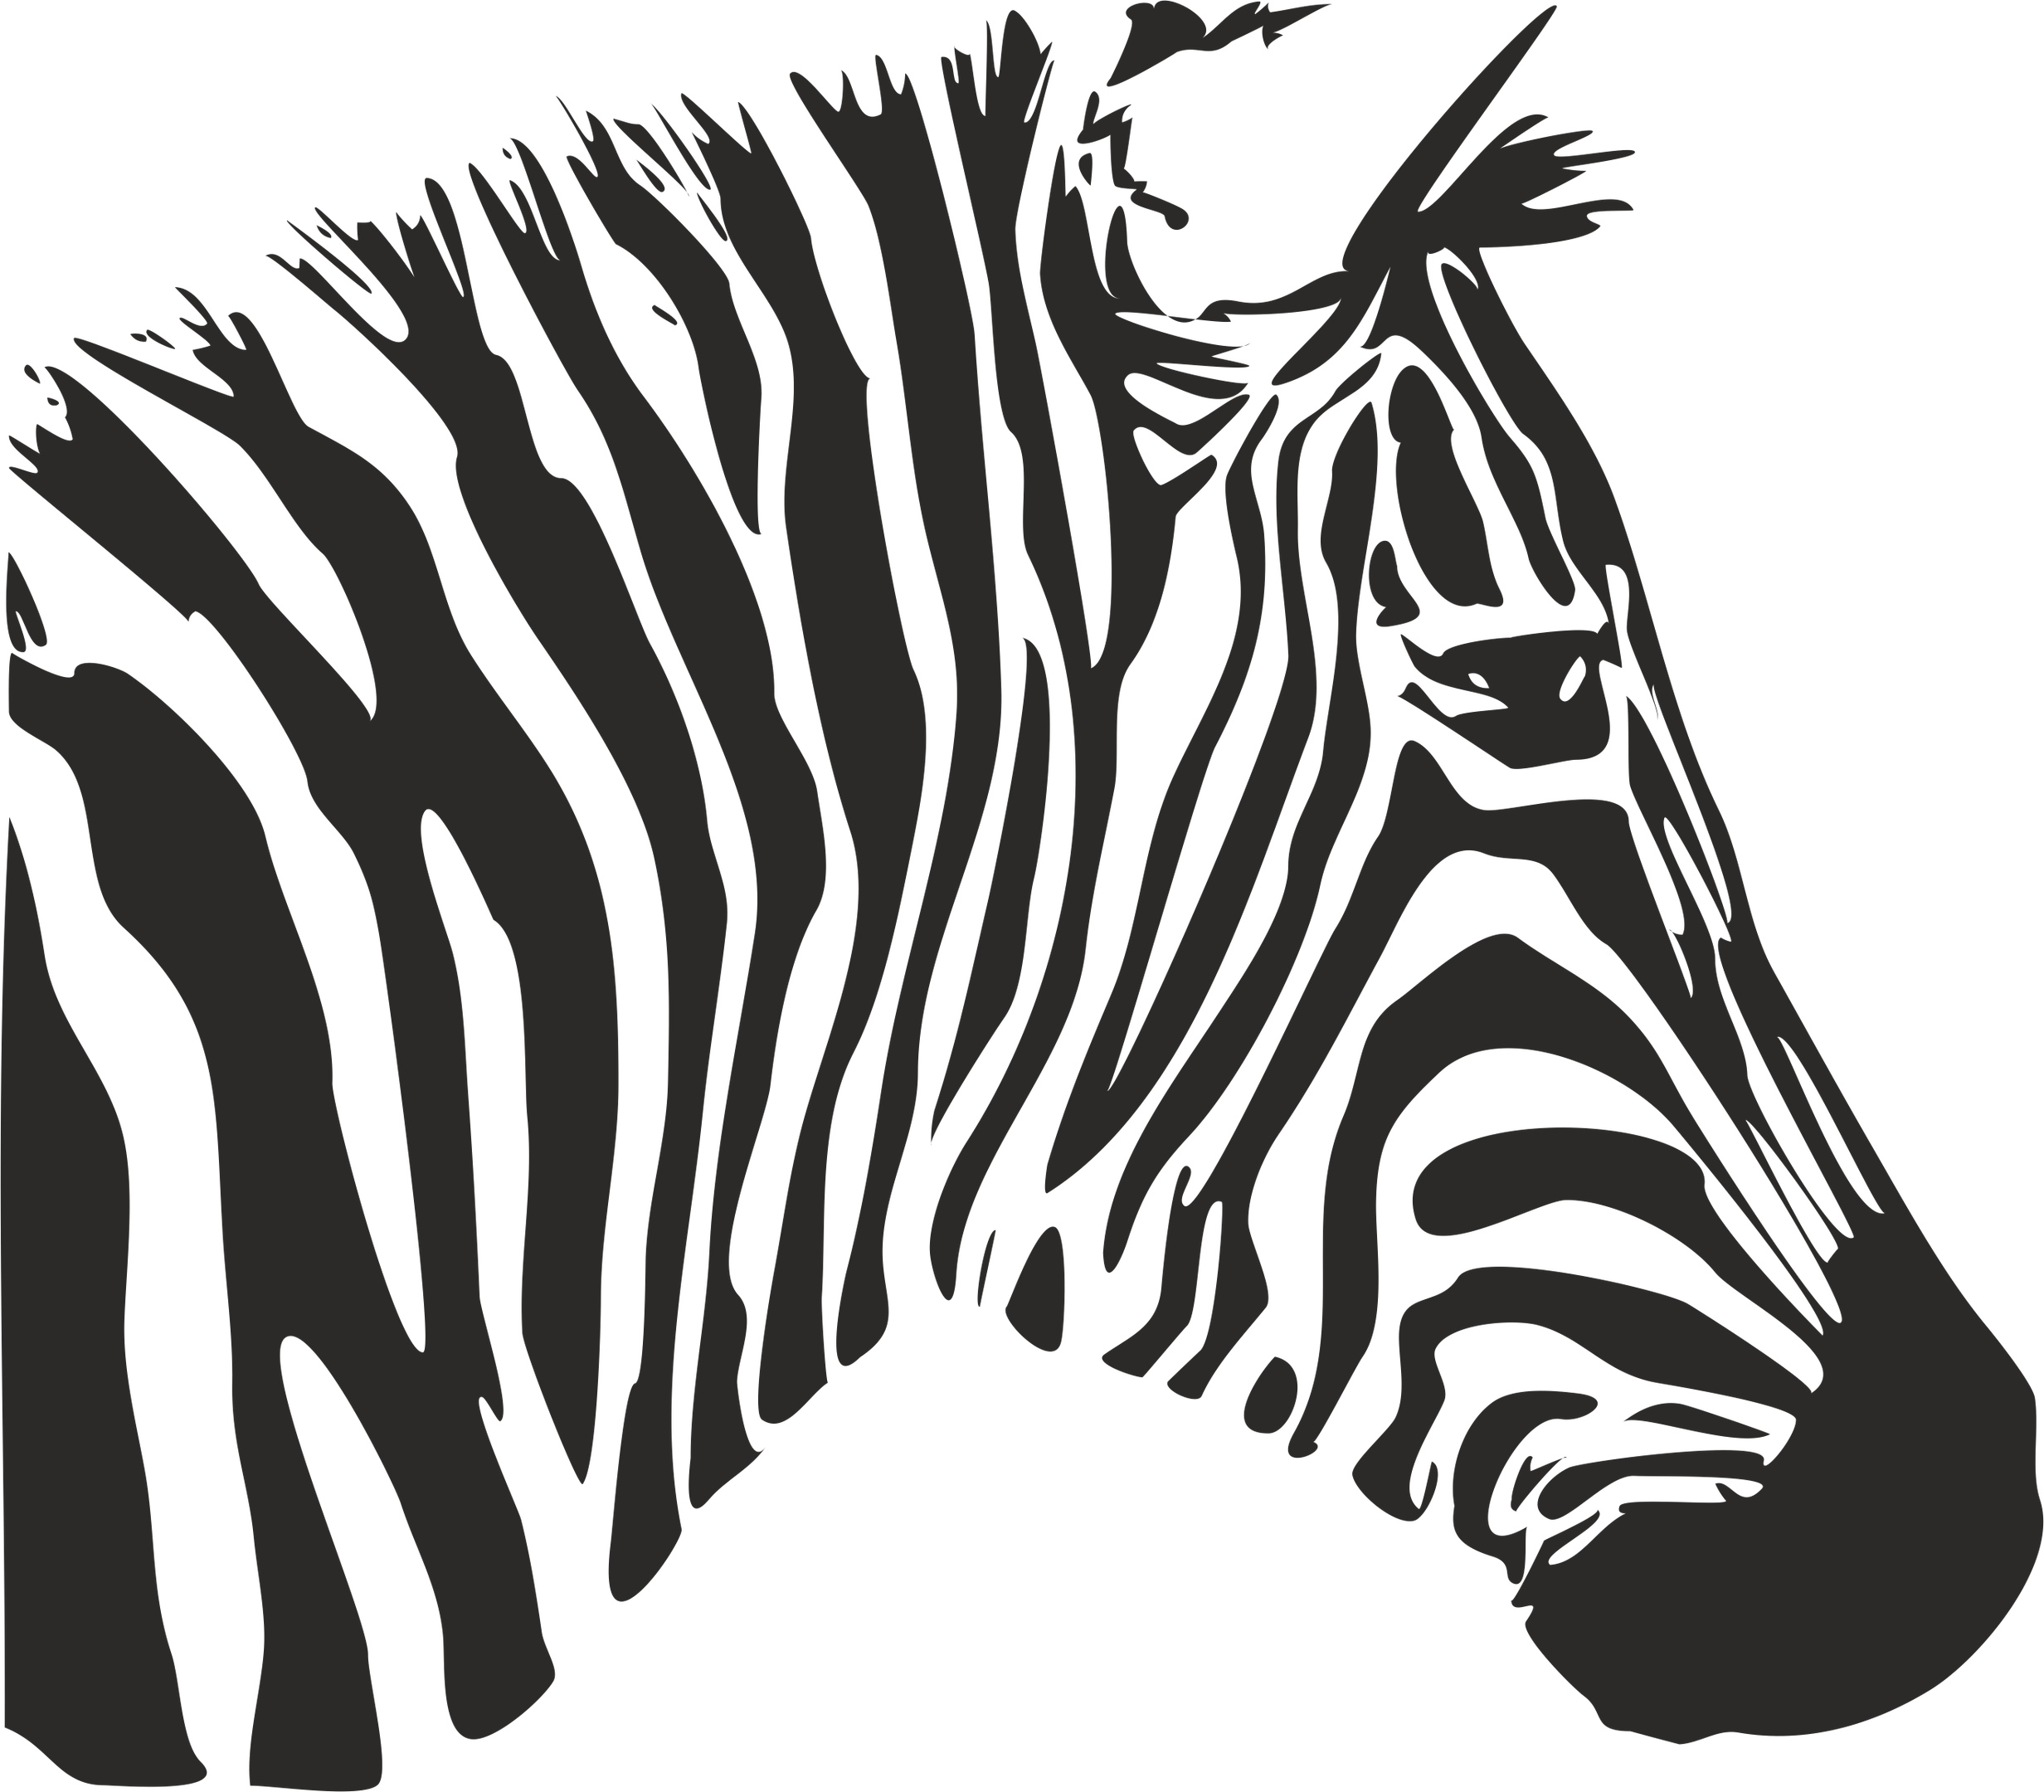 Zebra Stencil Free Vector cdr Download 3axis.co